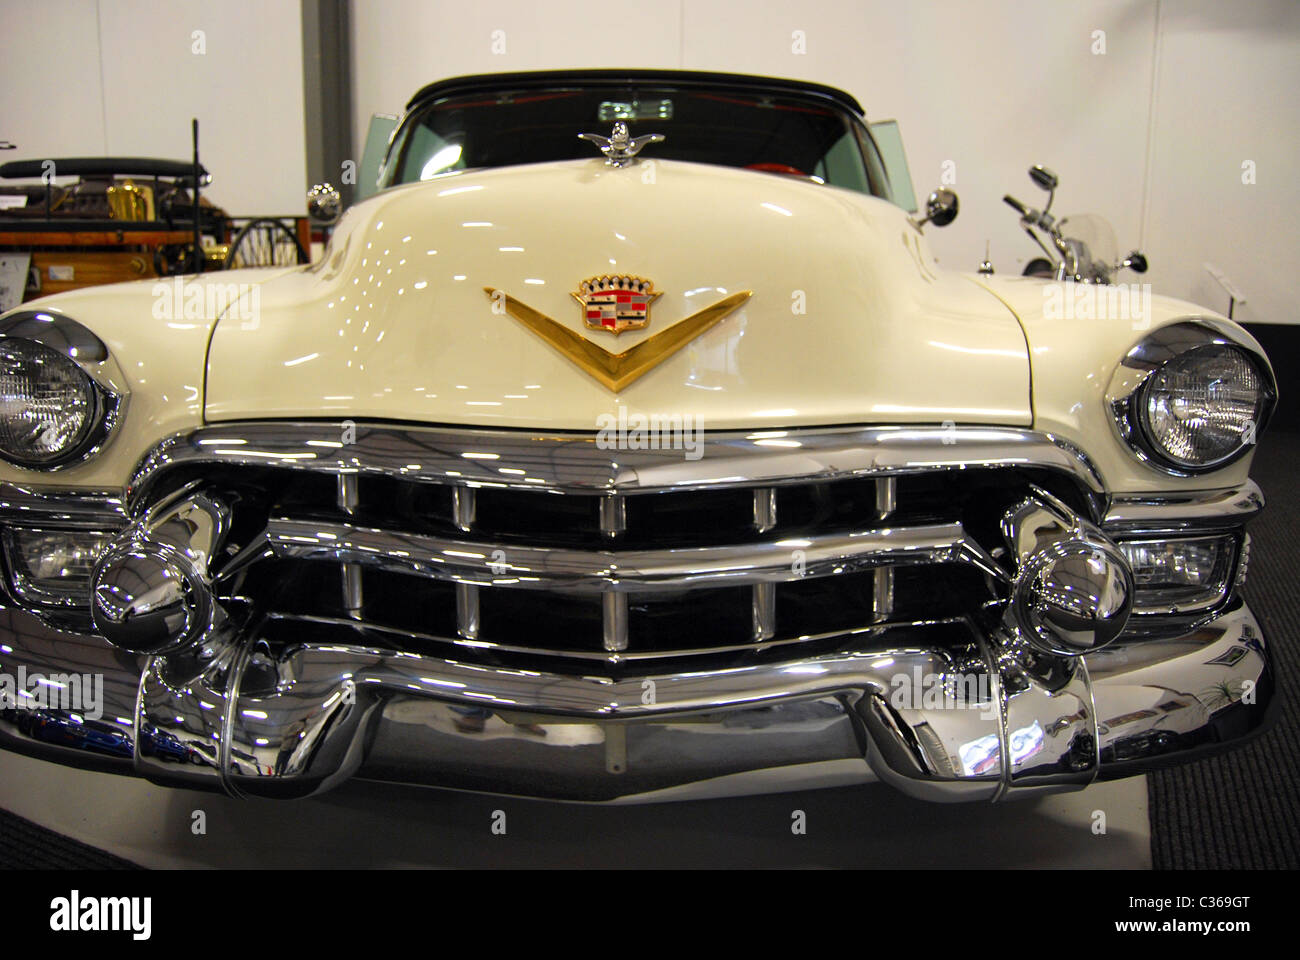 1953 Cadillac Eldorado car at Classic Cars Museum, Nelson, South Island New Zealand Stock Photo